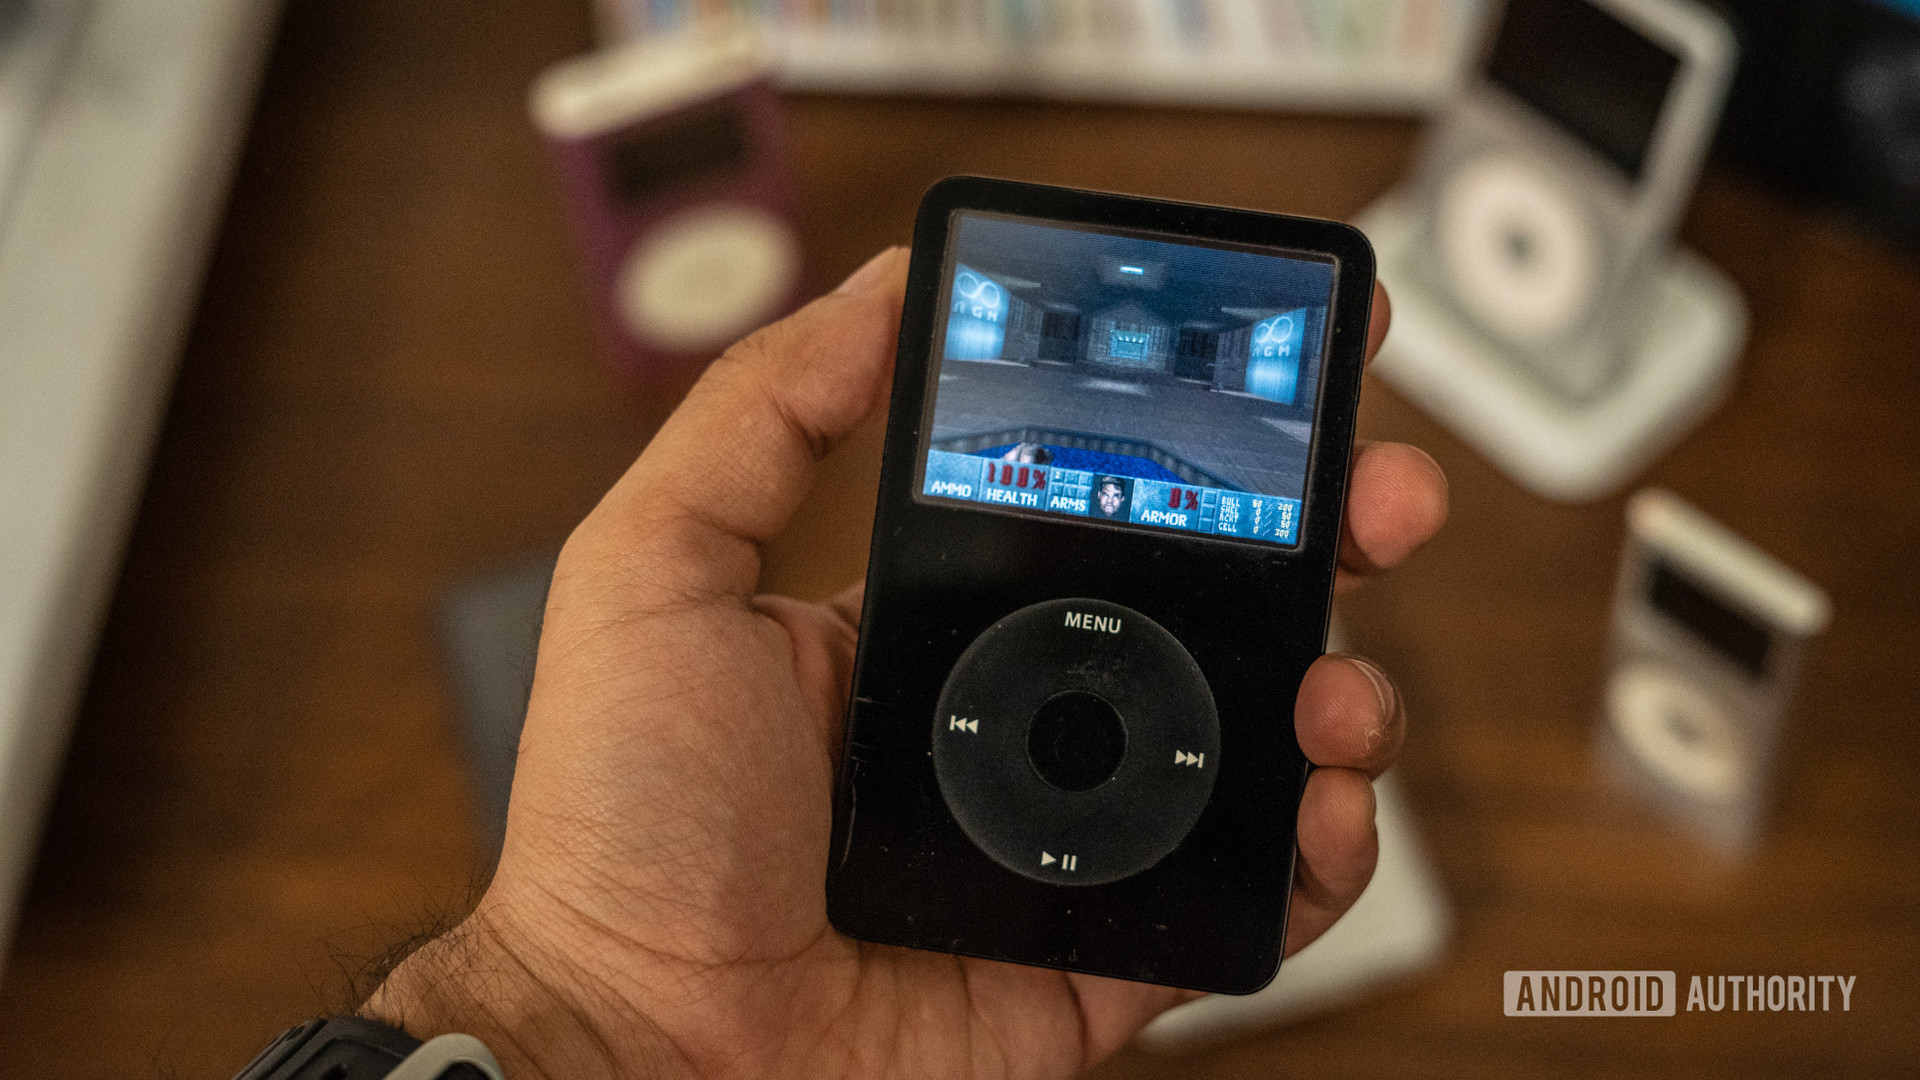 iPod Classic fifth generation